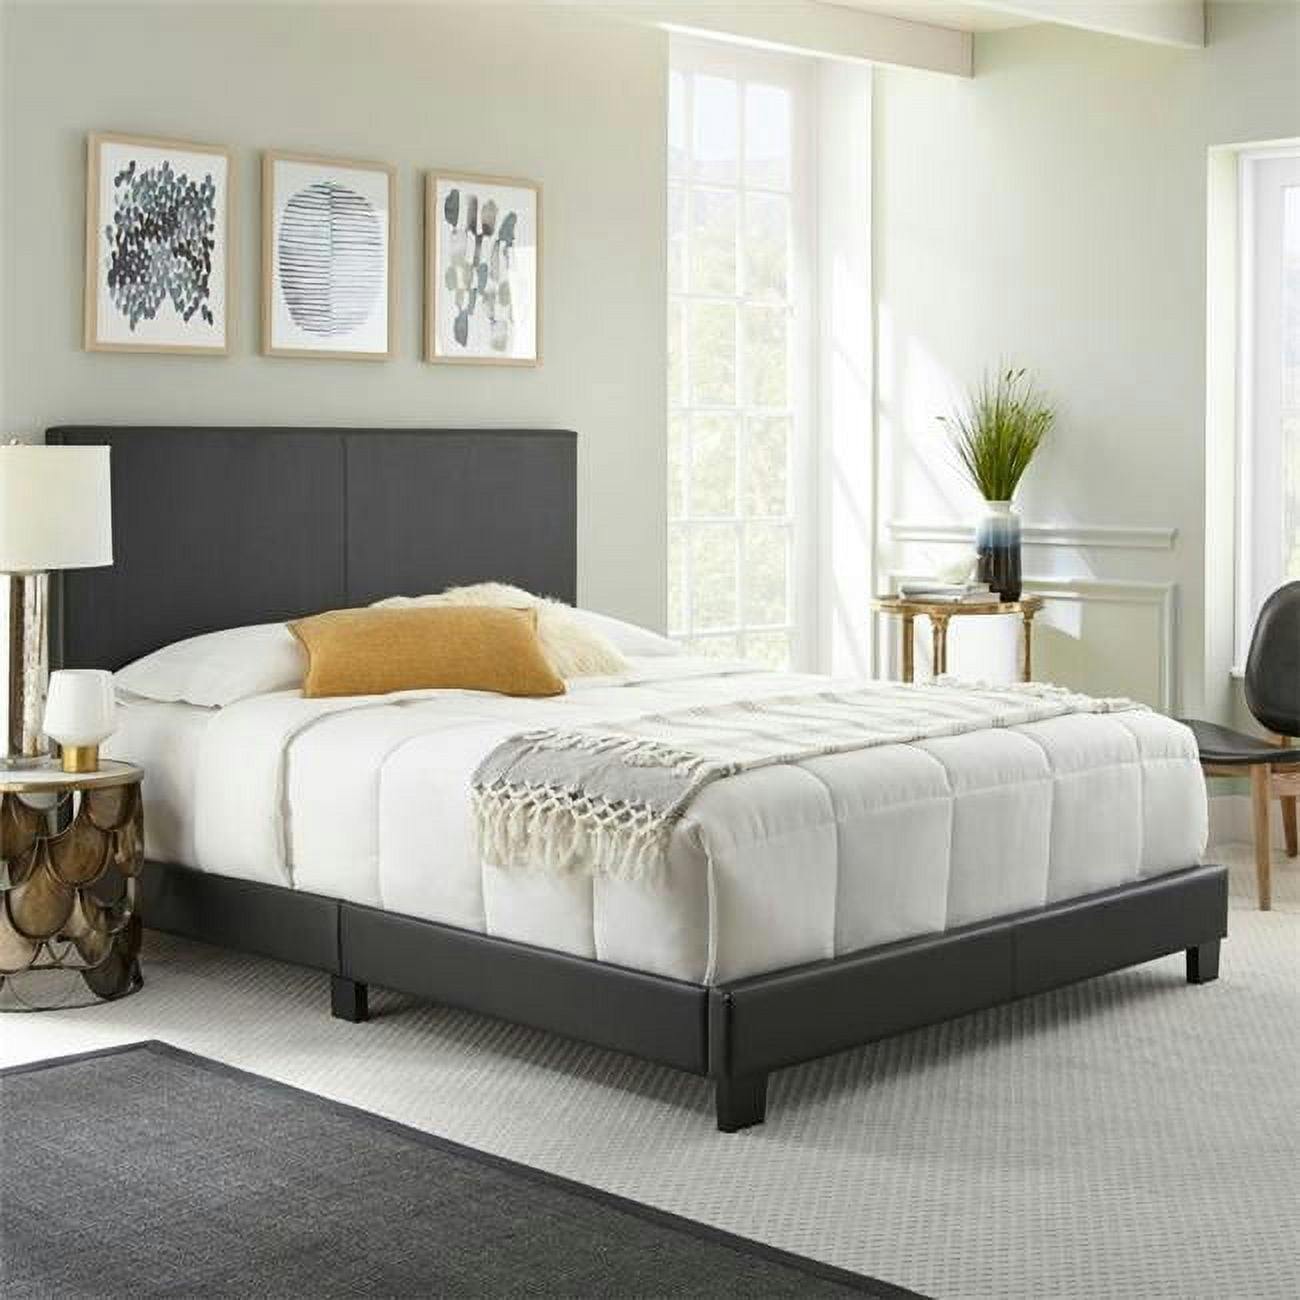 Florence Sleek Black Faux Leather Upholstered King Bed